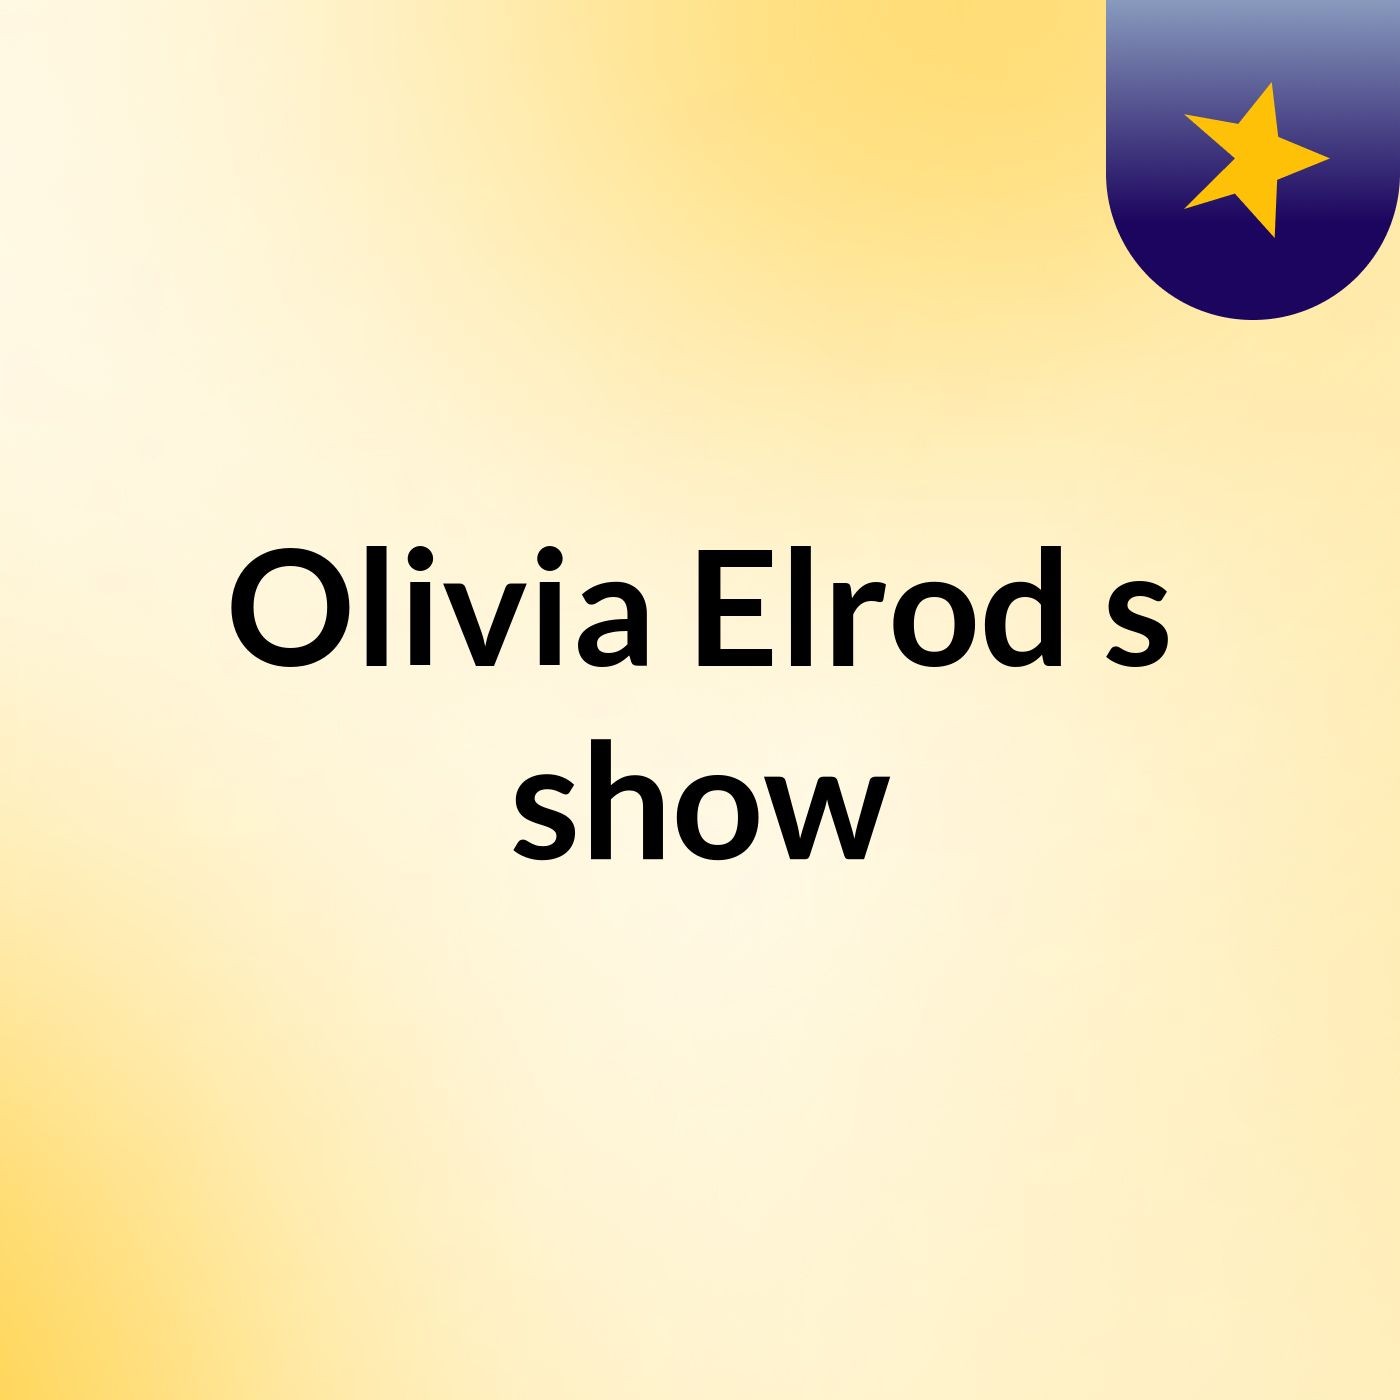 Olivia Elrod's show